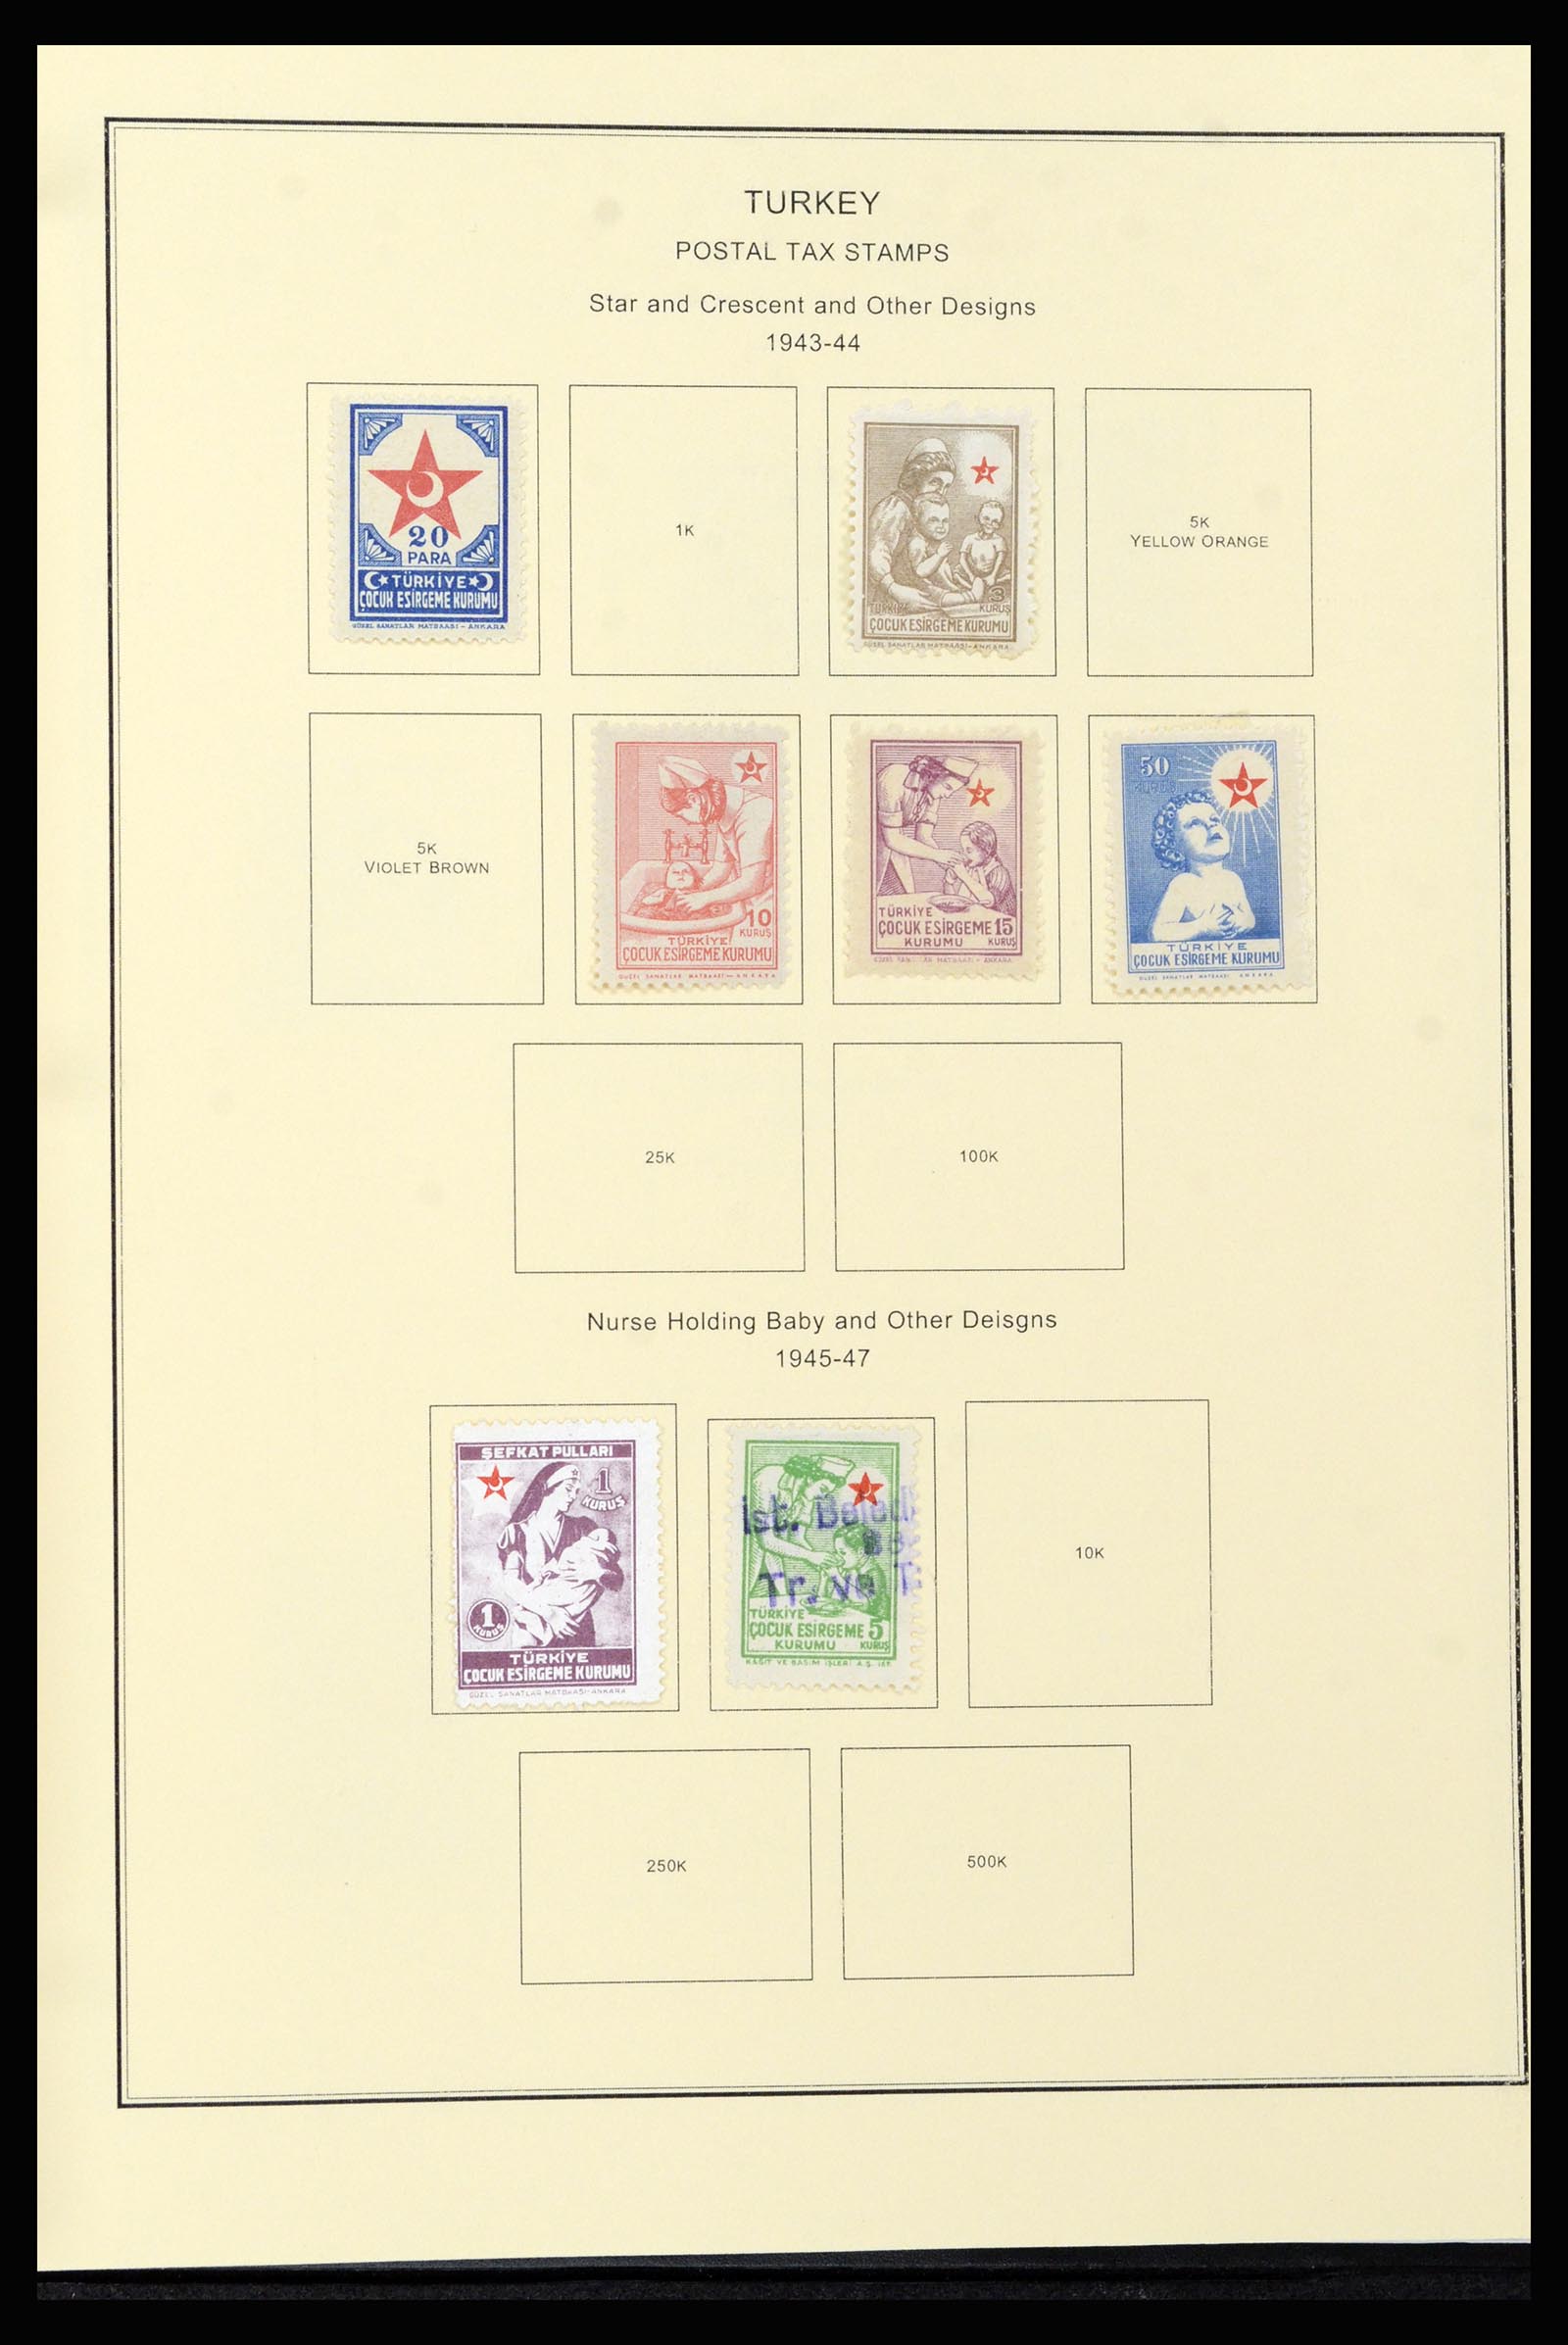 37224 094 - Stamp collection 37224 Turkey 1863-2000.